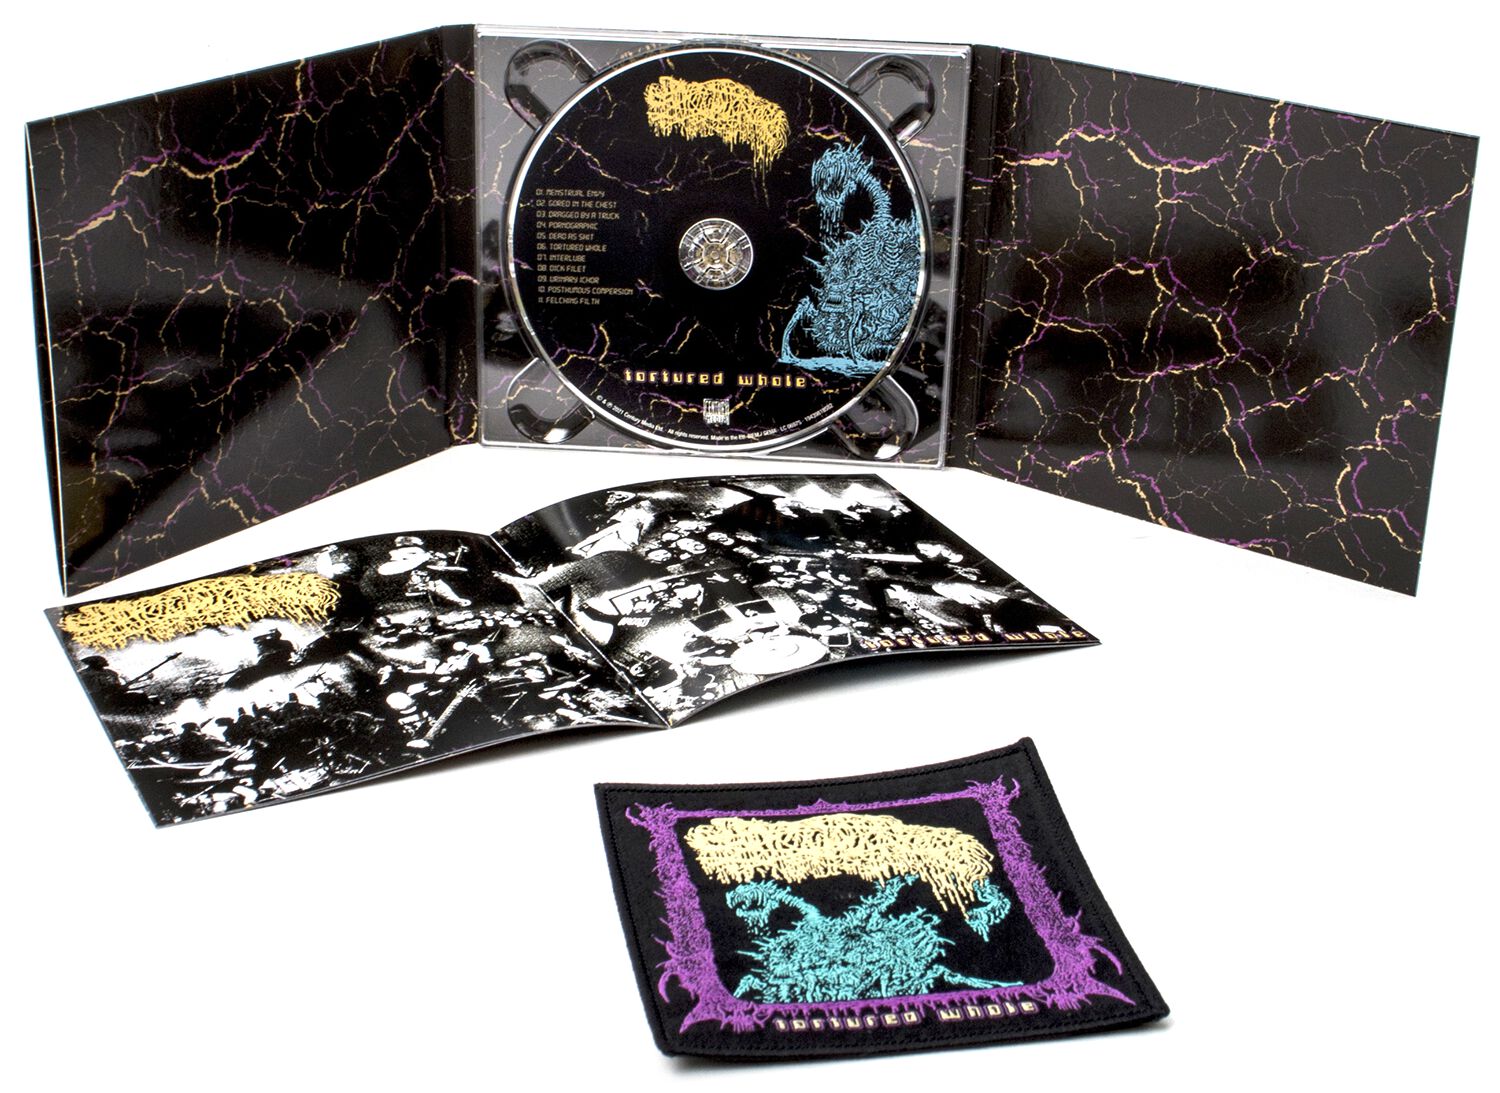 Image of Sanguisugabogg Tortured whole CD & Patch Standard